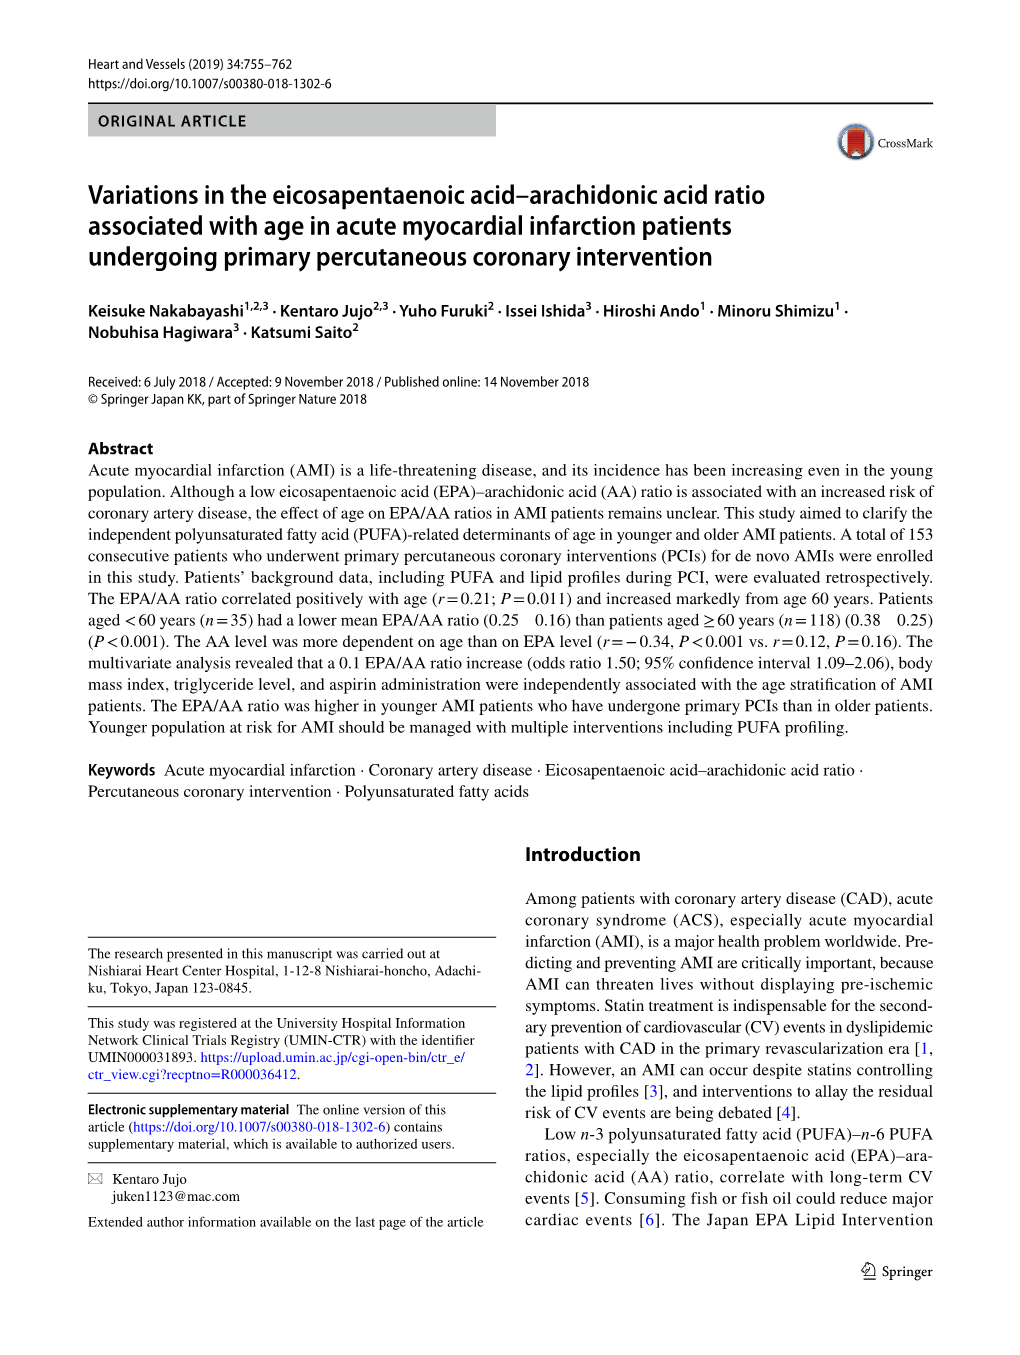 Variations in the Eicosapentaenoic Acid–Arachidonic Acid Ratio